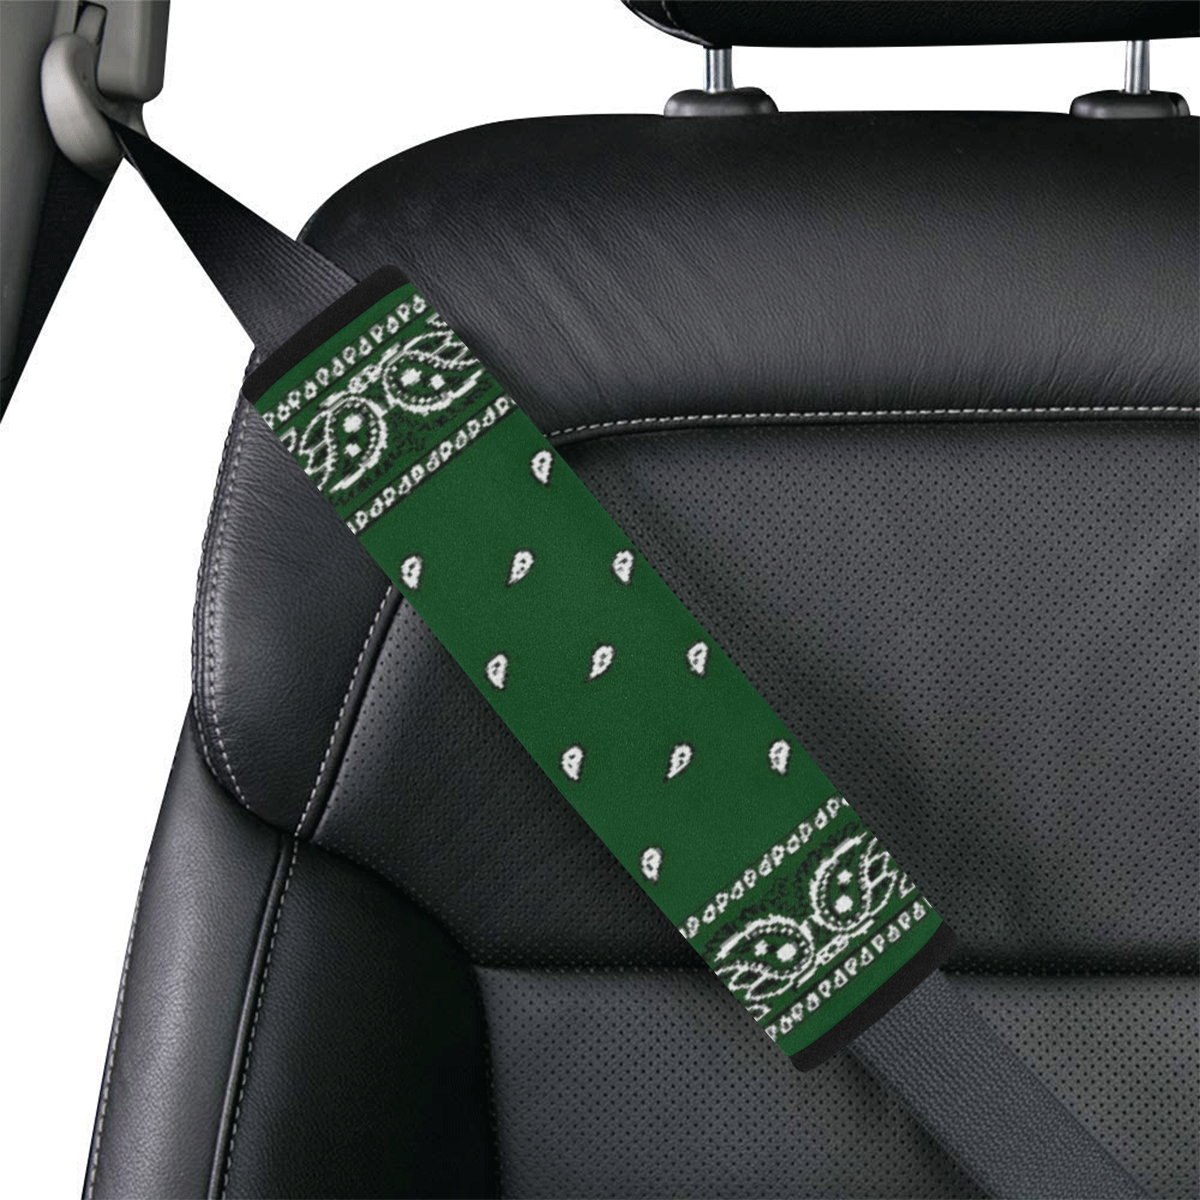 KERCHIEF PATTERN GREEN Car Seat Belt Cover 7''x12.6''